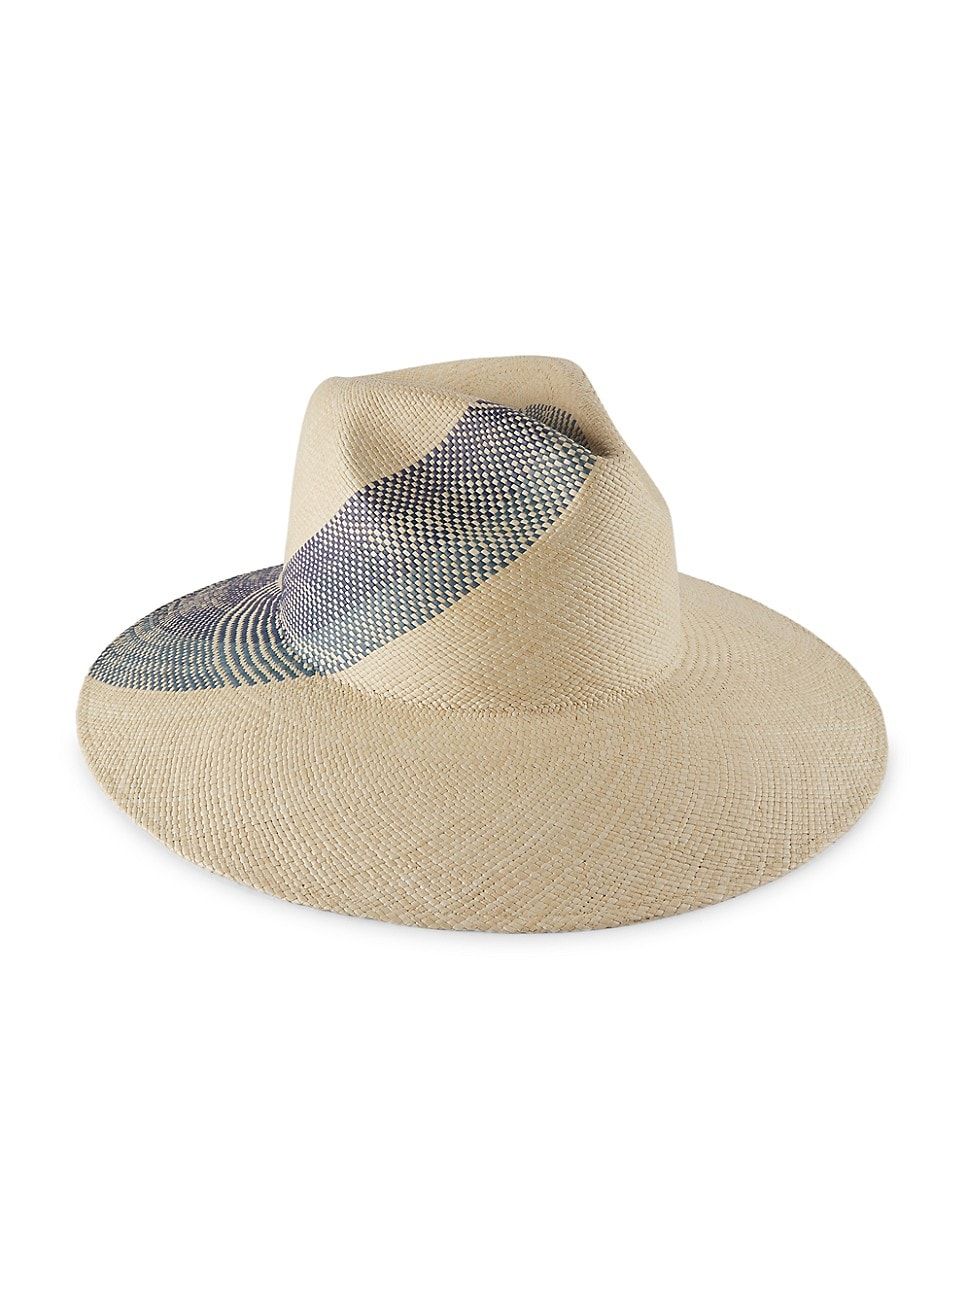 Freya Sunrise Ocean Fedora Hat | Saks Fifth Avenue